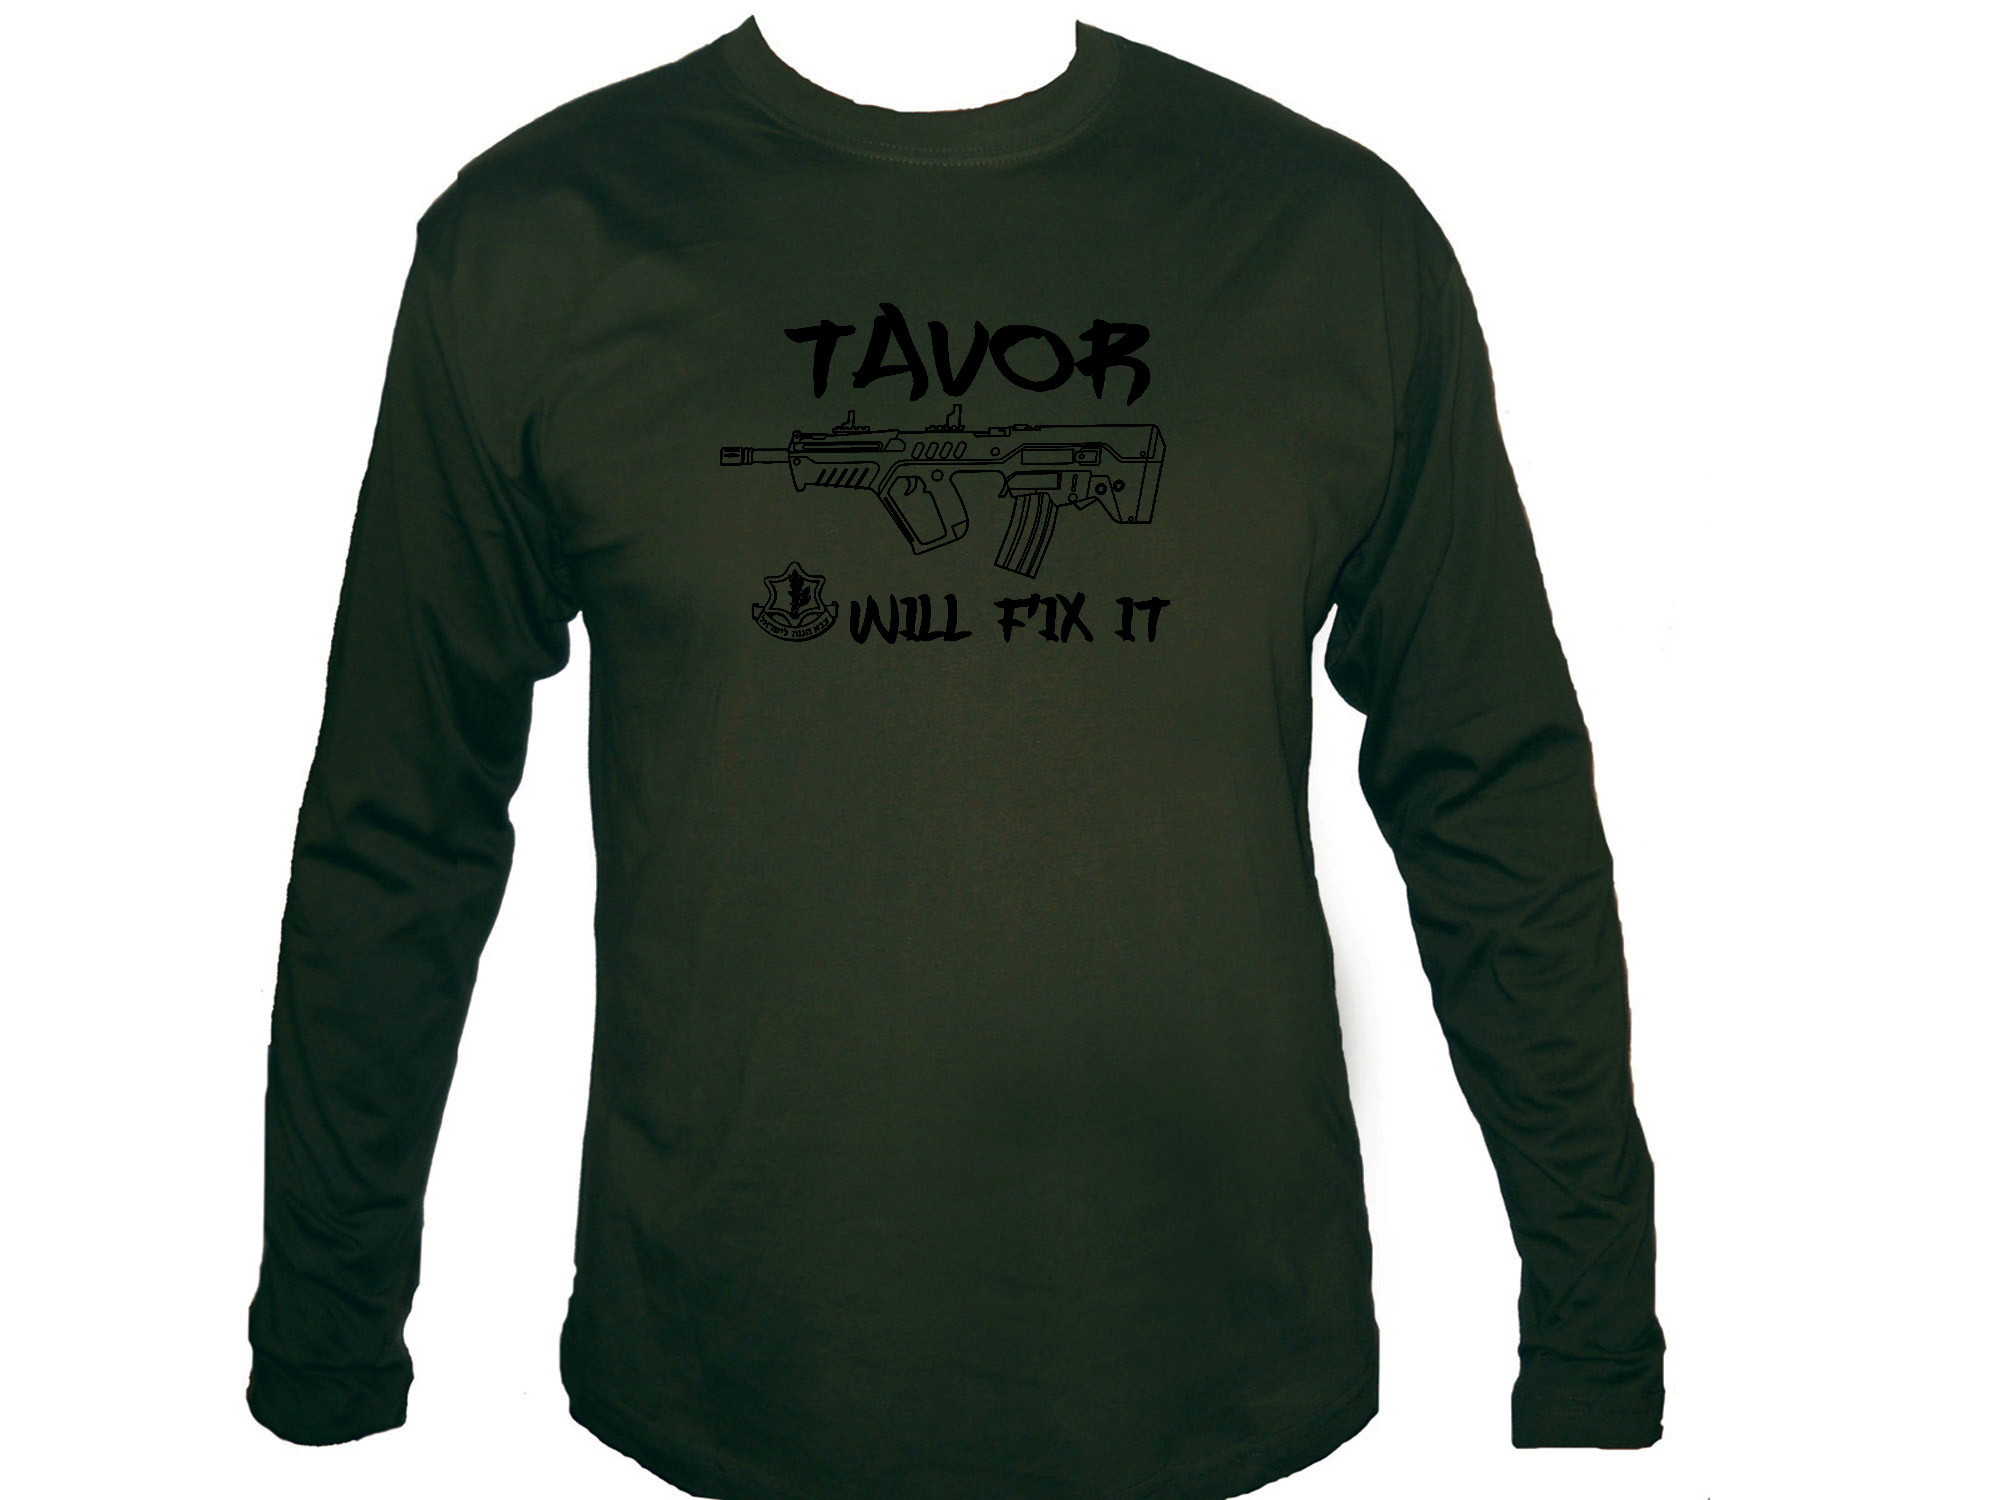 Tavor Machine Gun Israel sleeved army green t-shirt